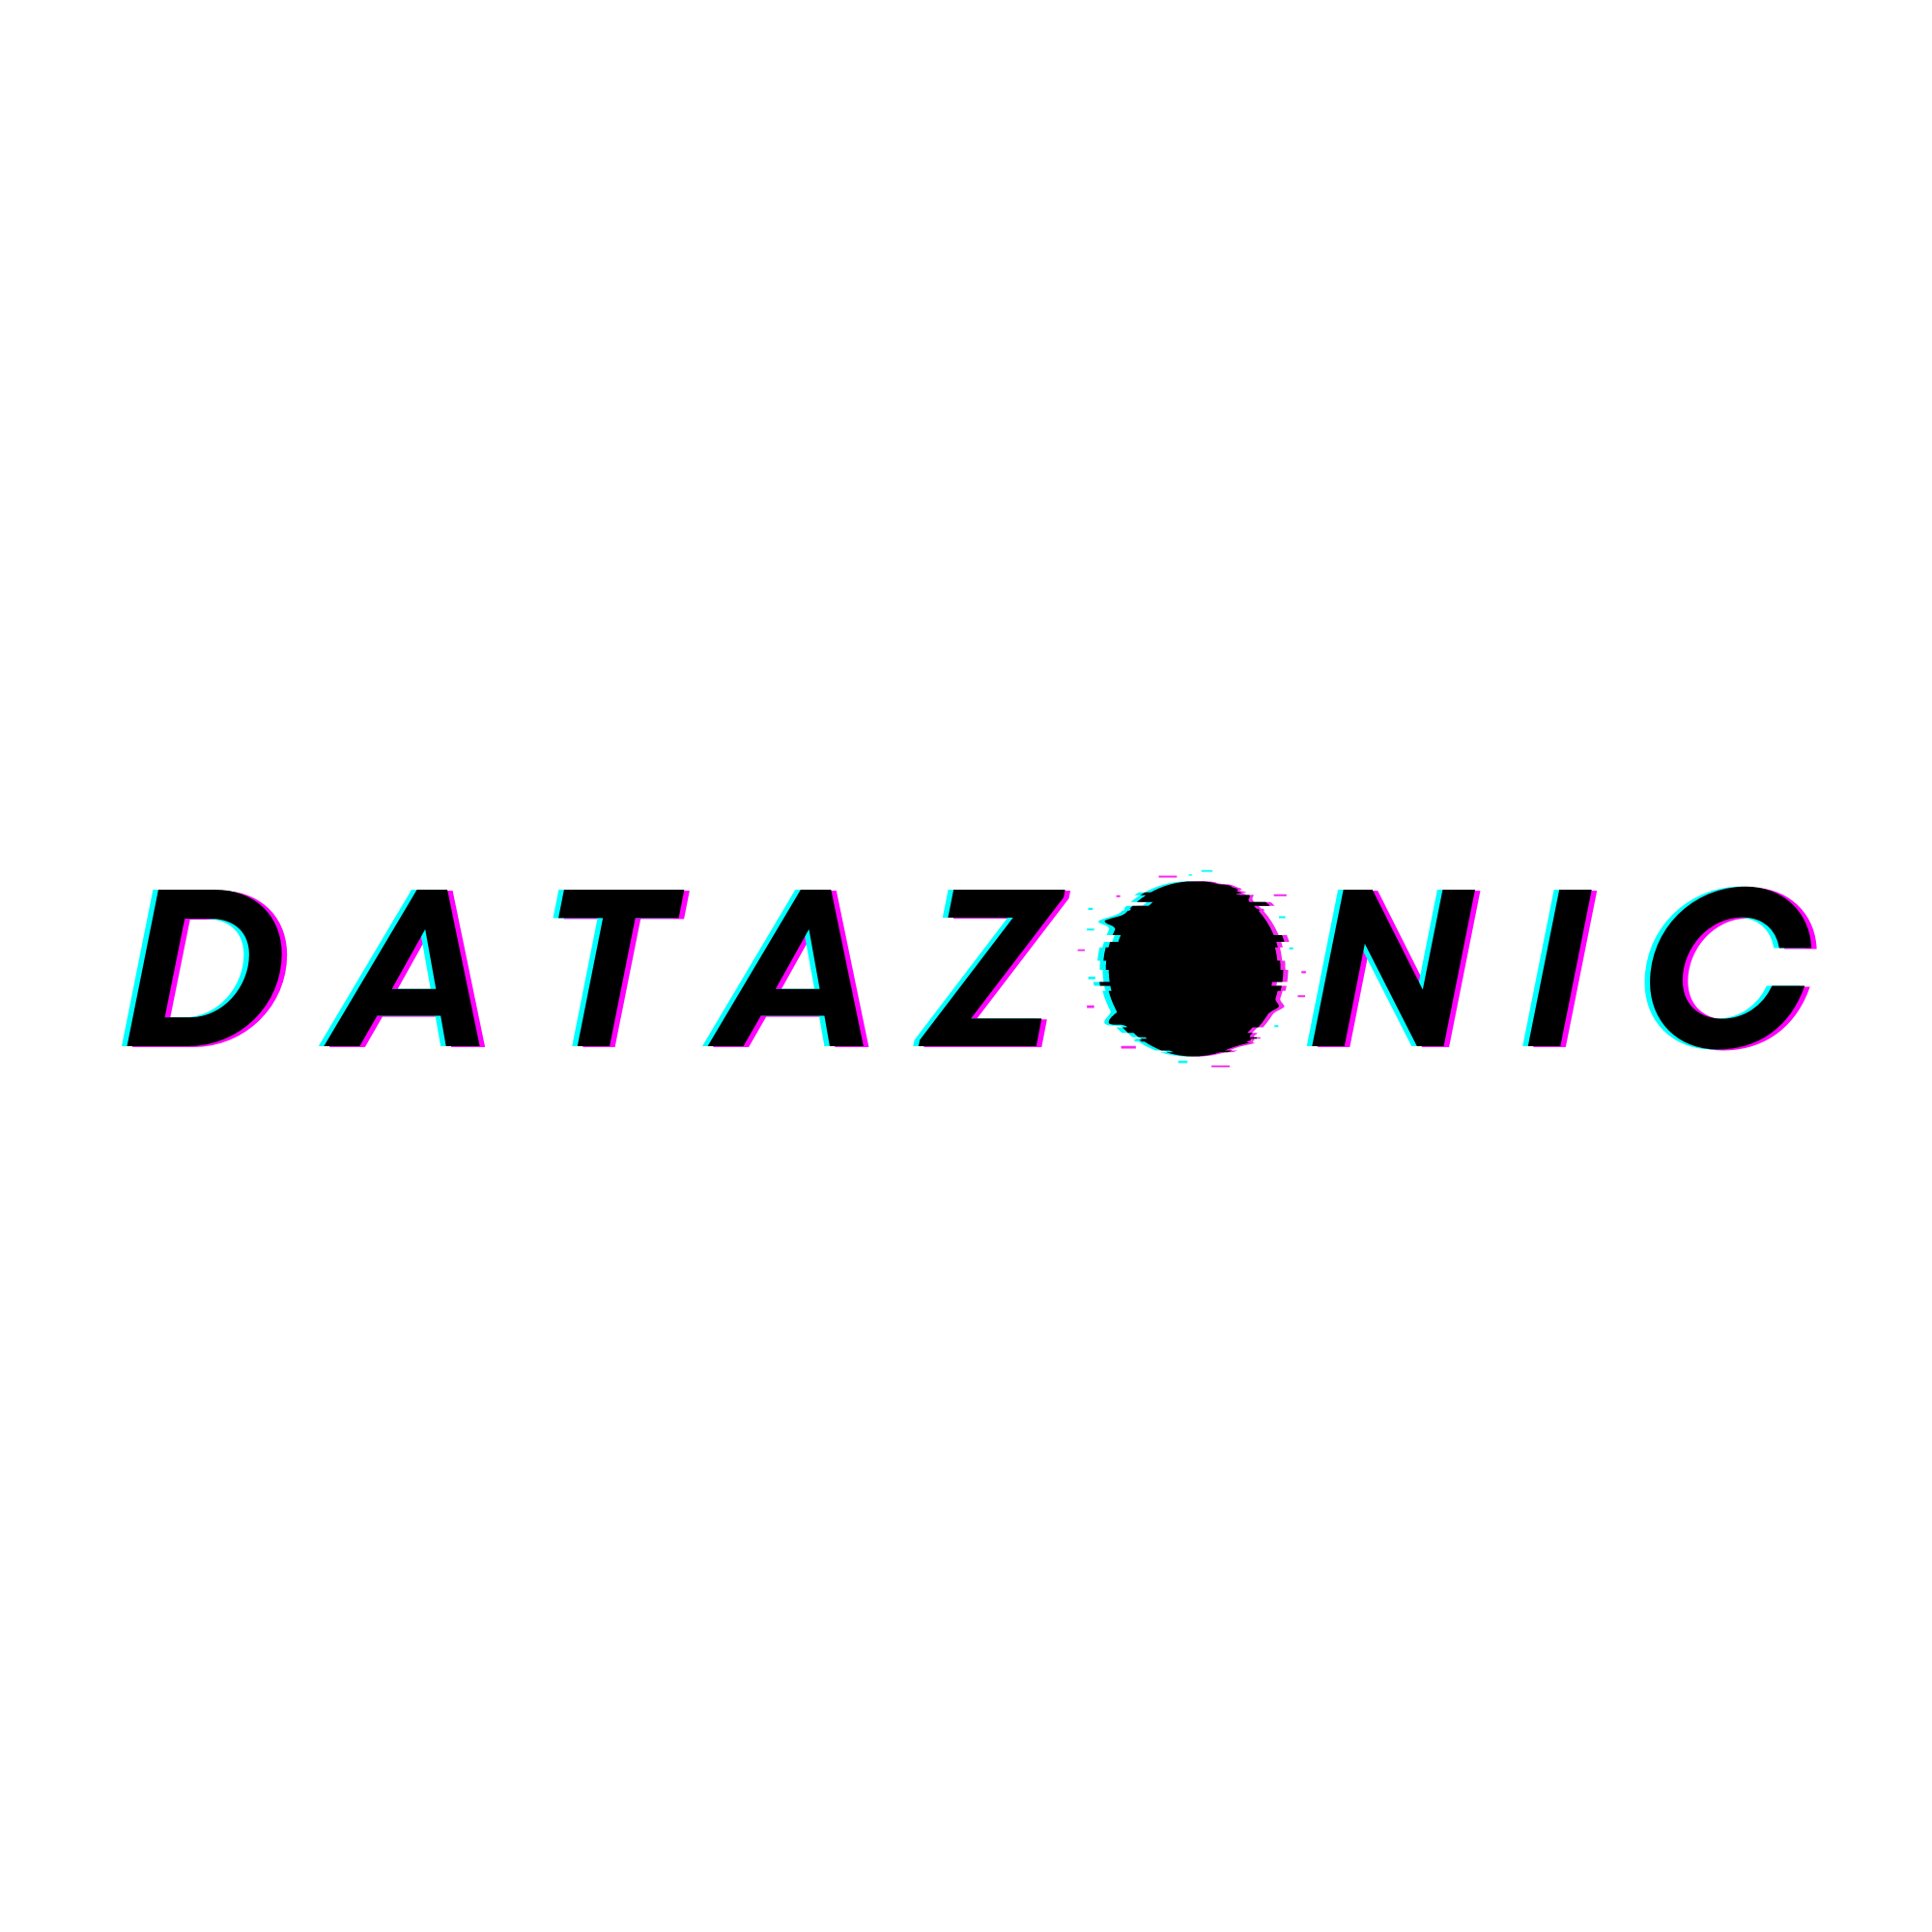 Datazonic logo